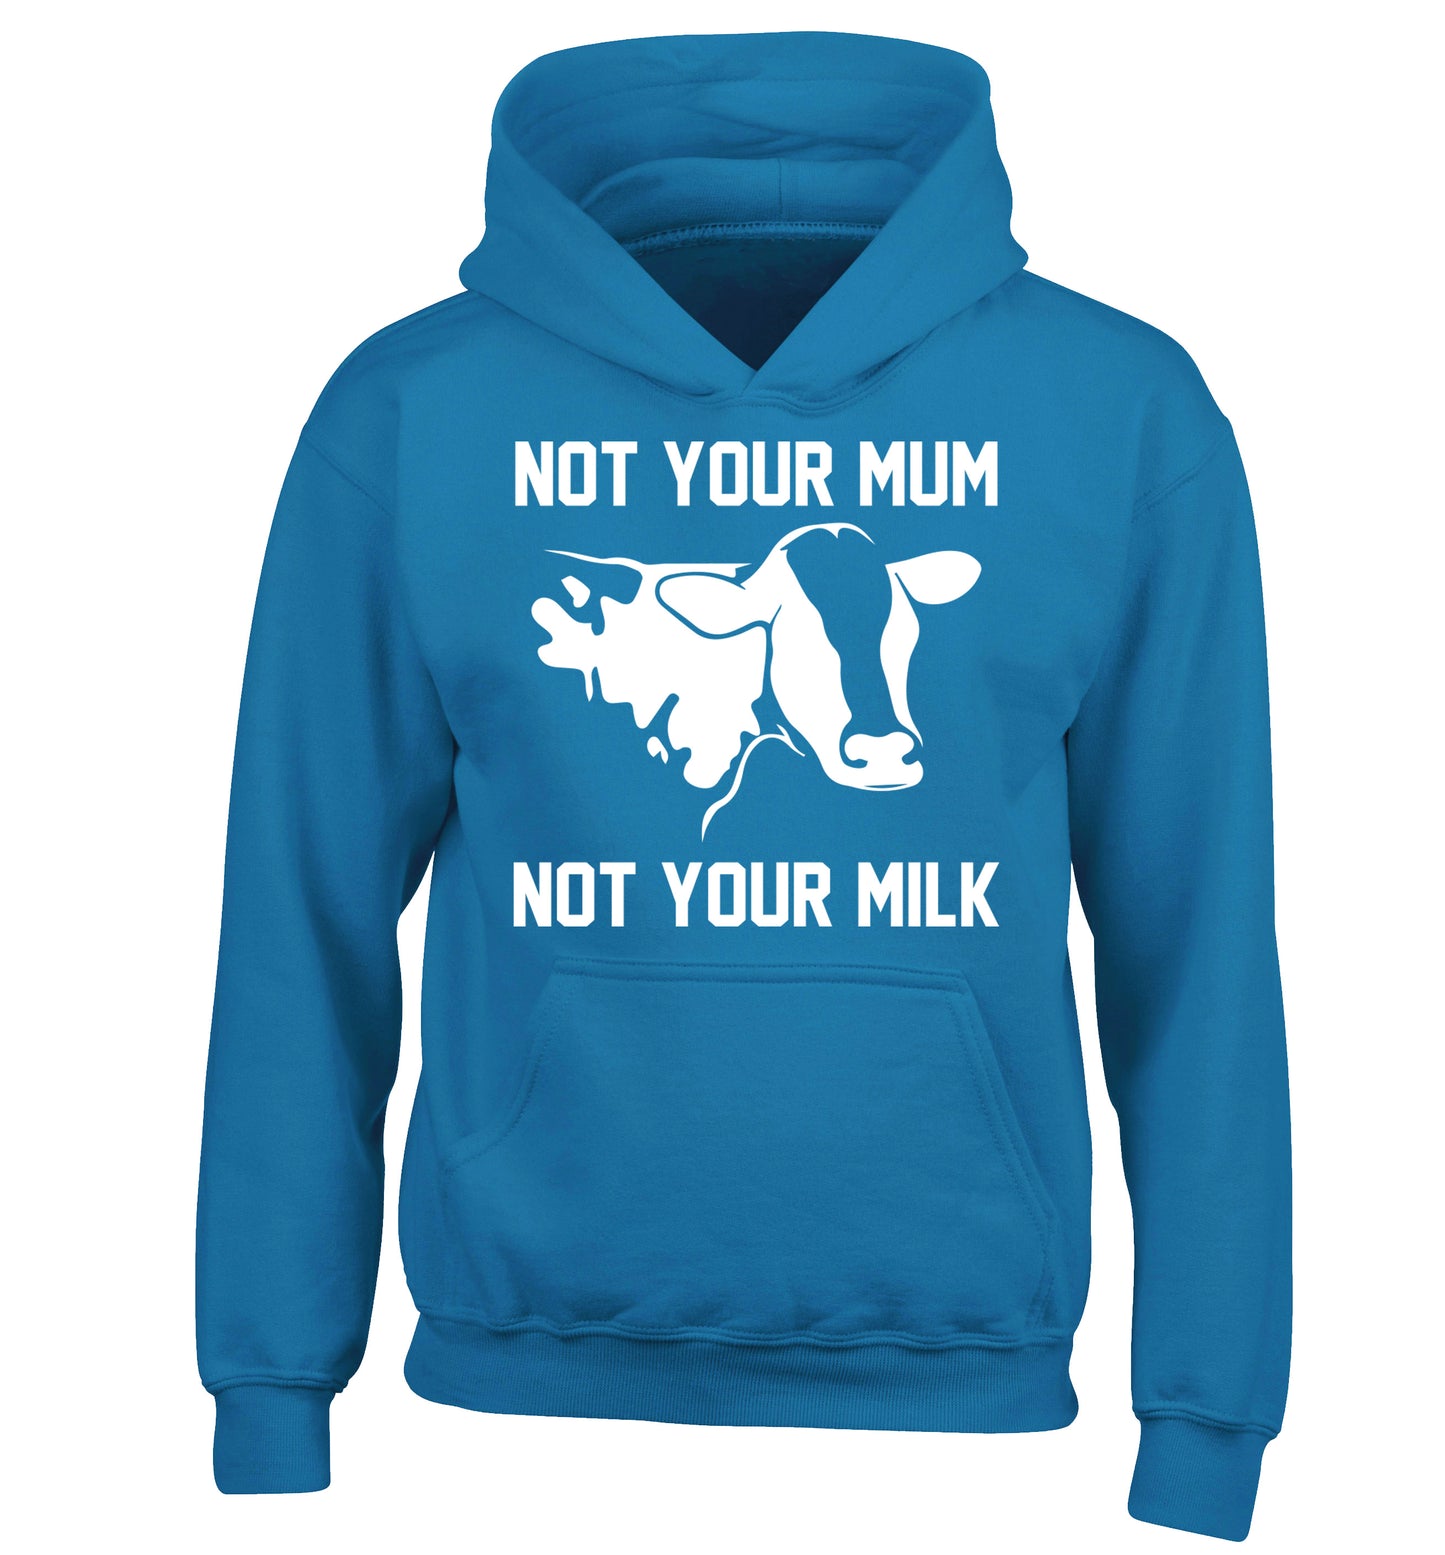 Not your mum not your milk children's blue hoodie 12-14 Years